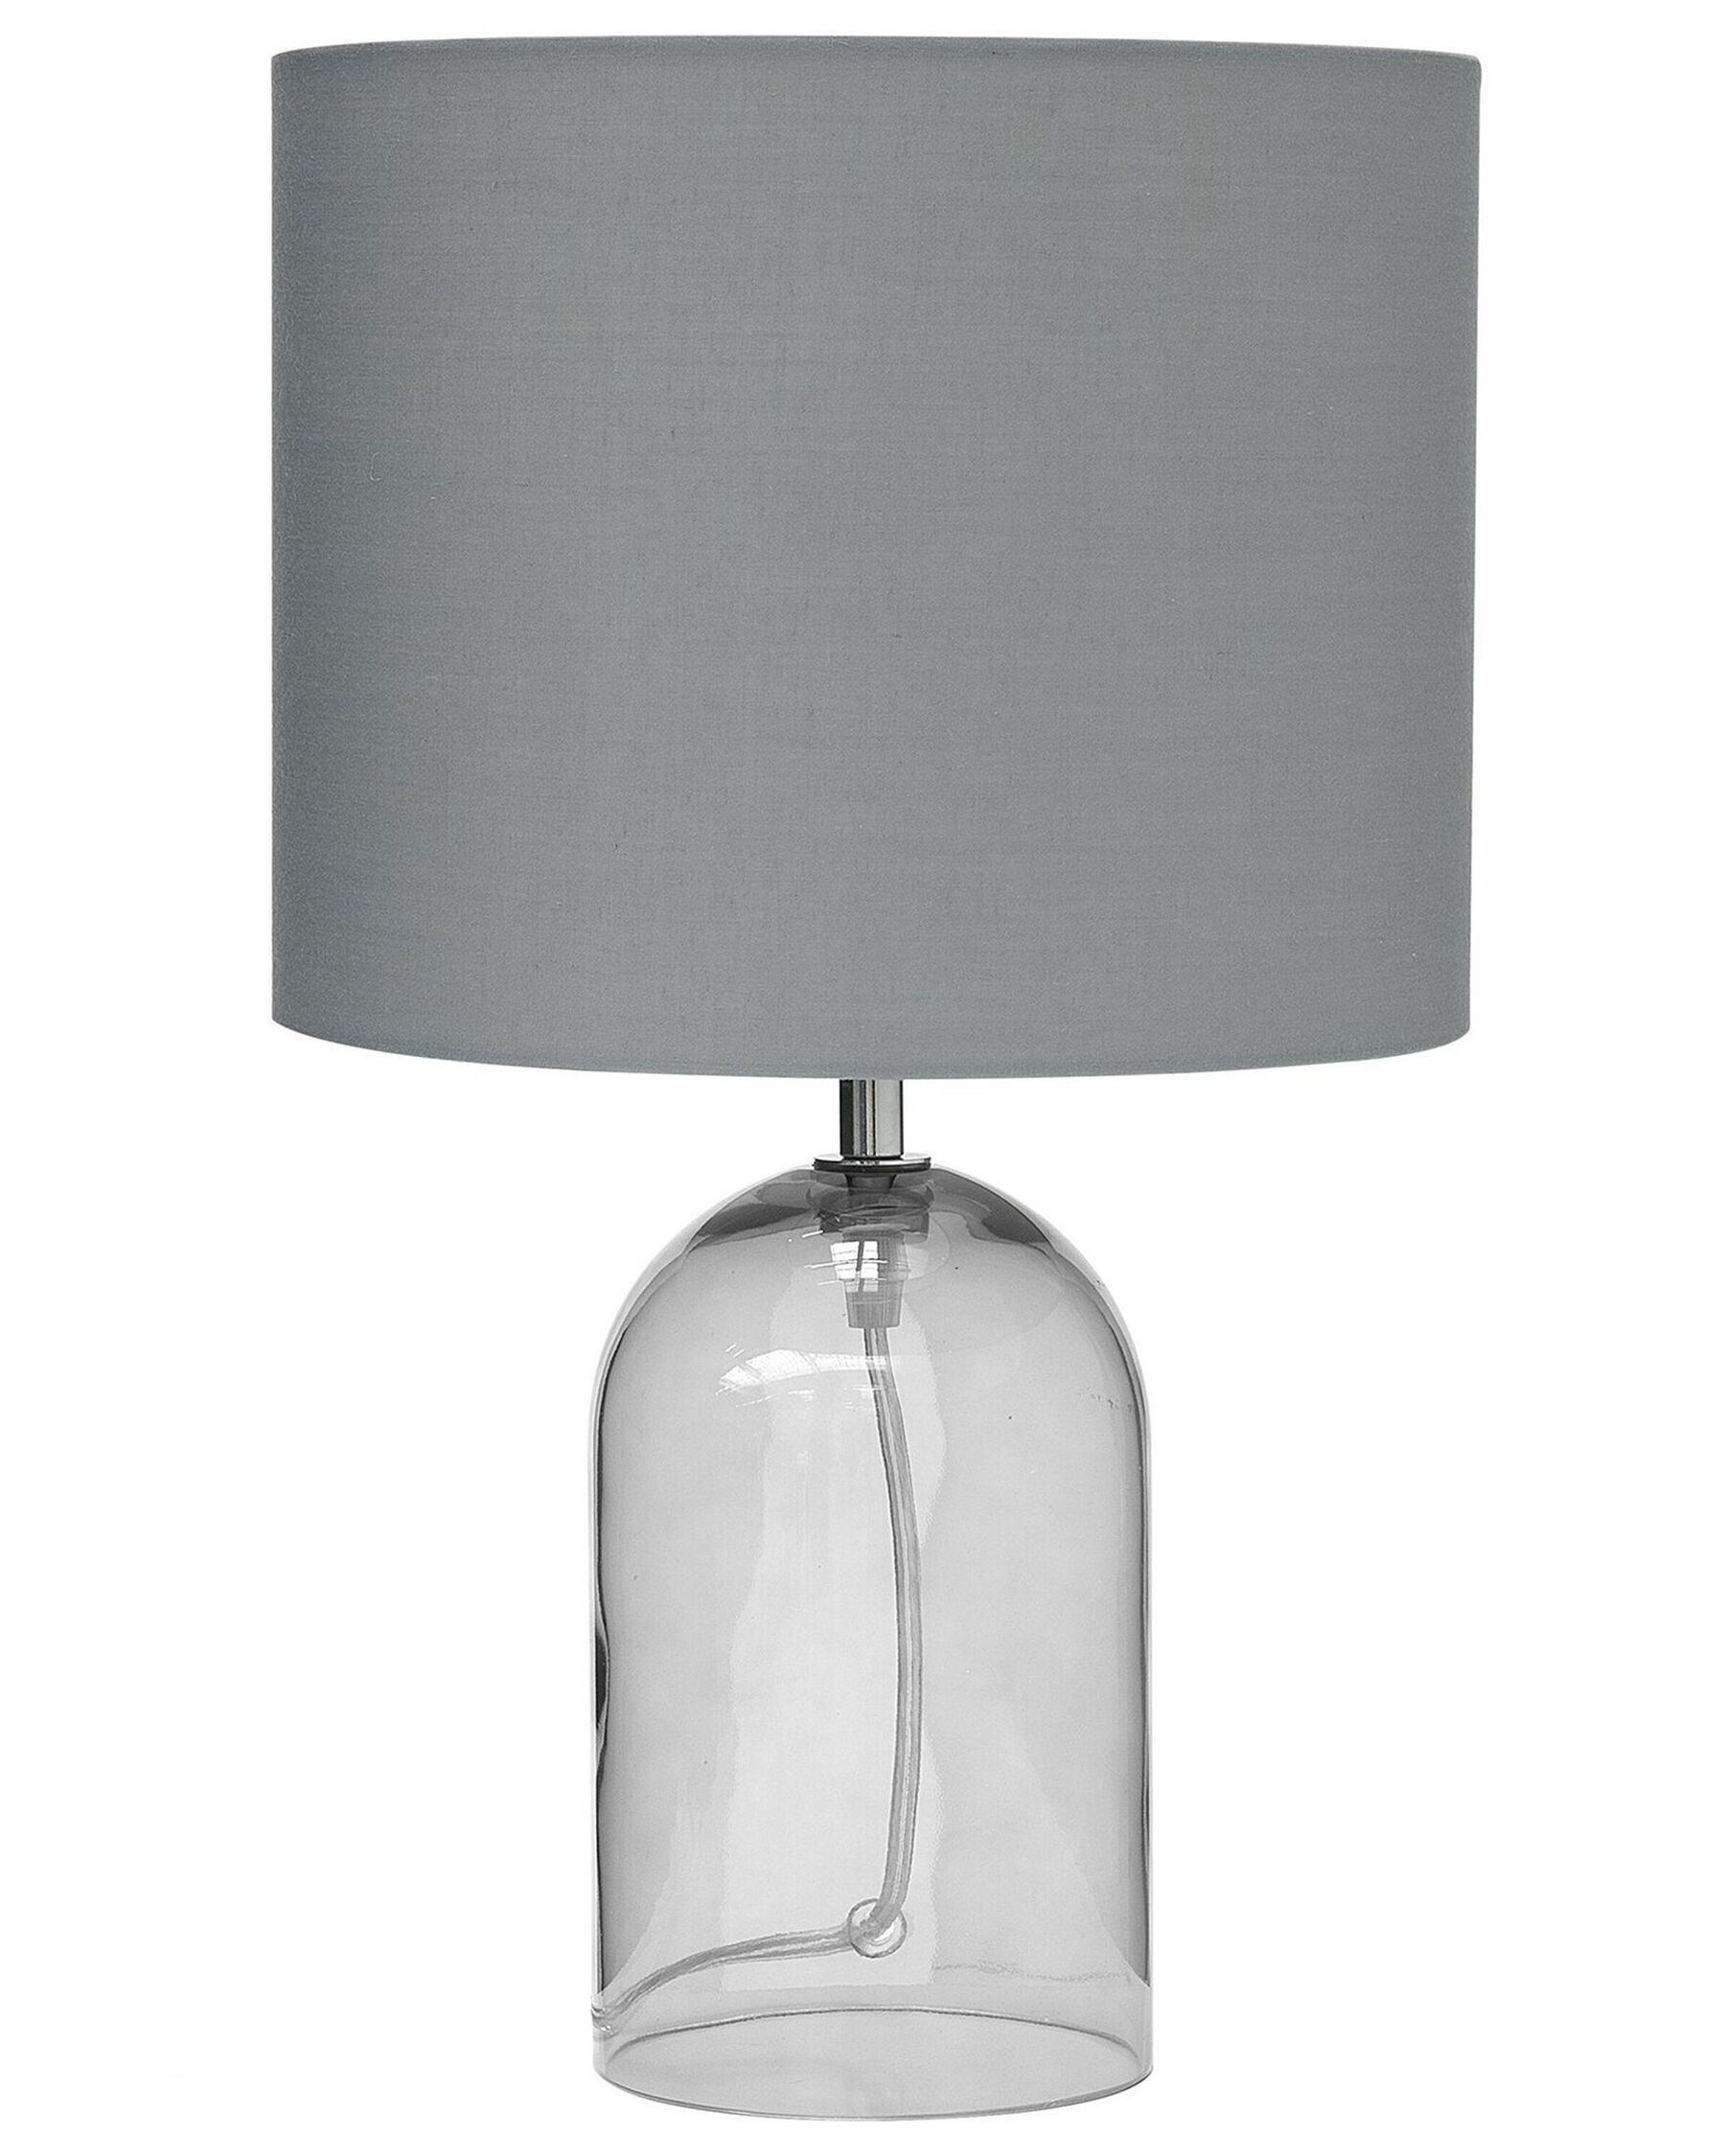 Tischlampe Glas transparent / grau 44 cm Trommelform DEVOLL_741408